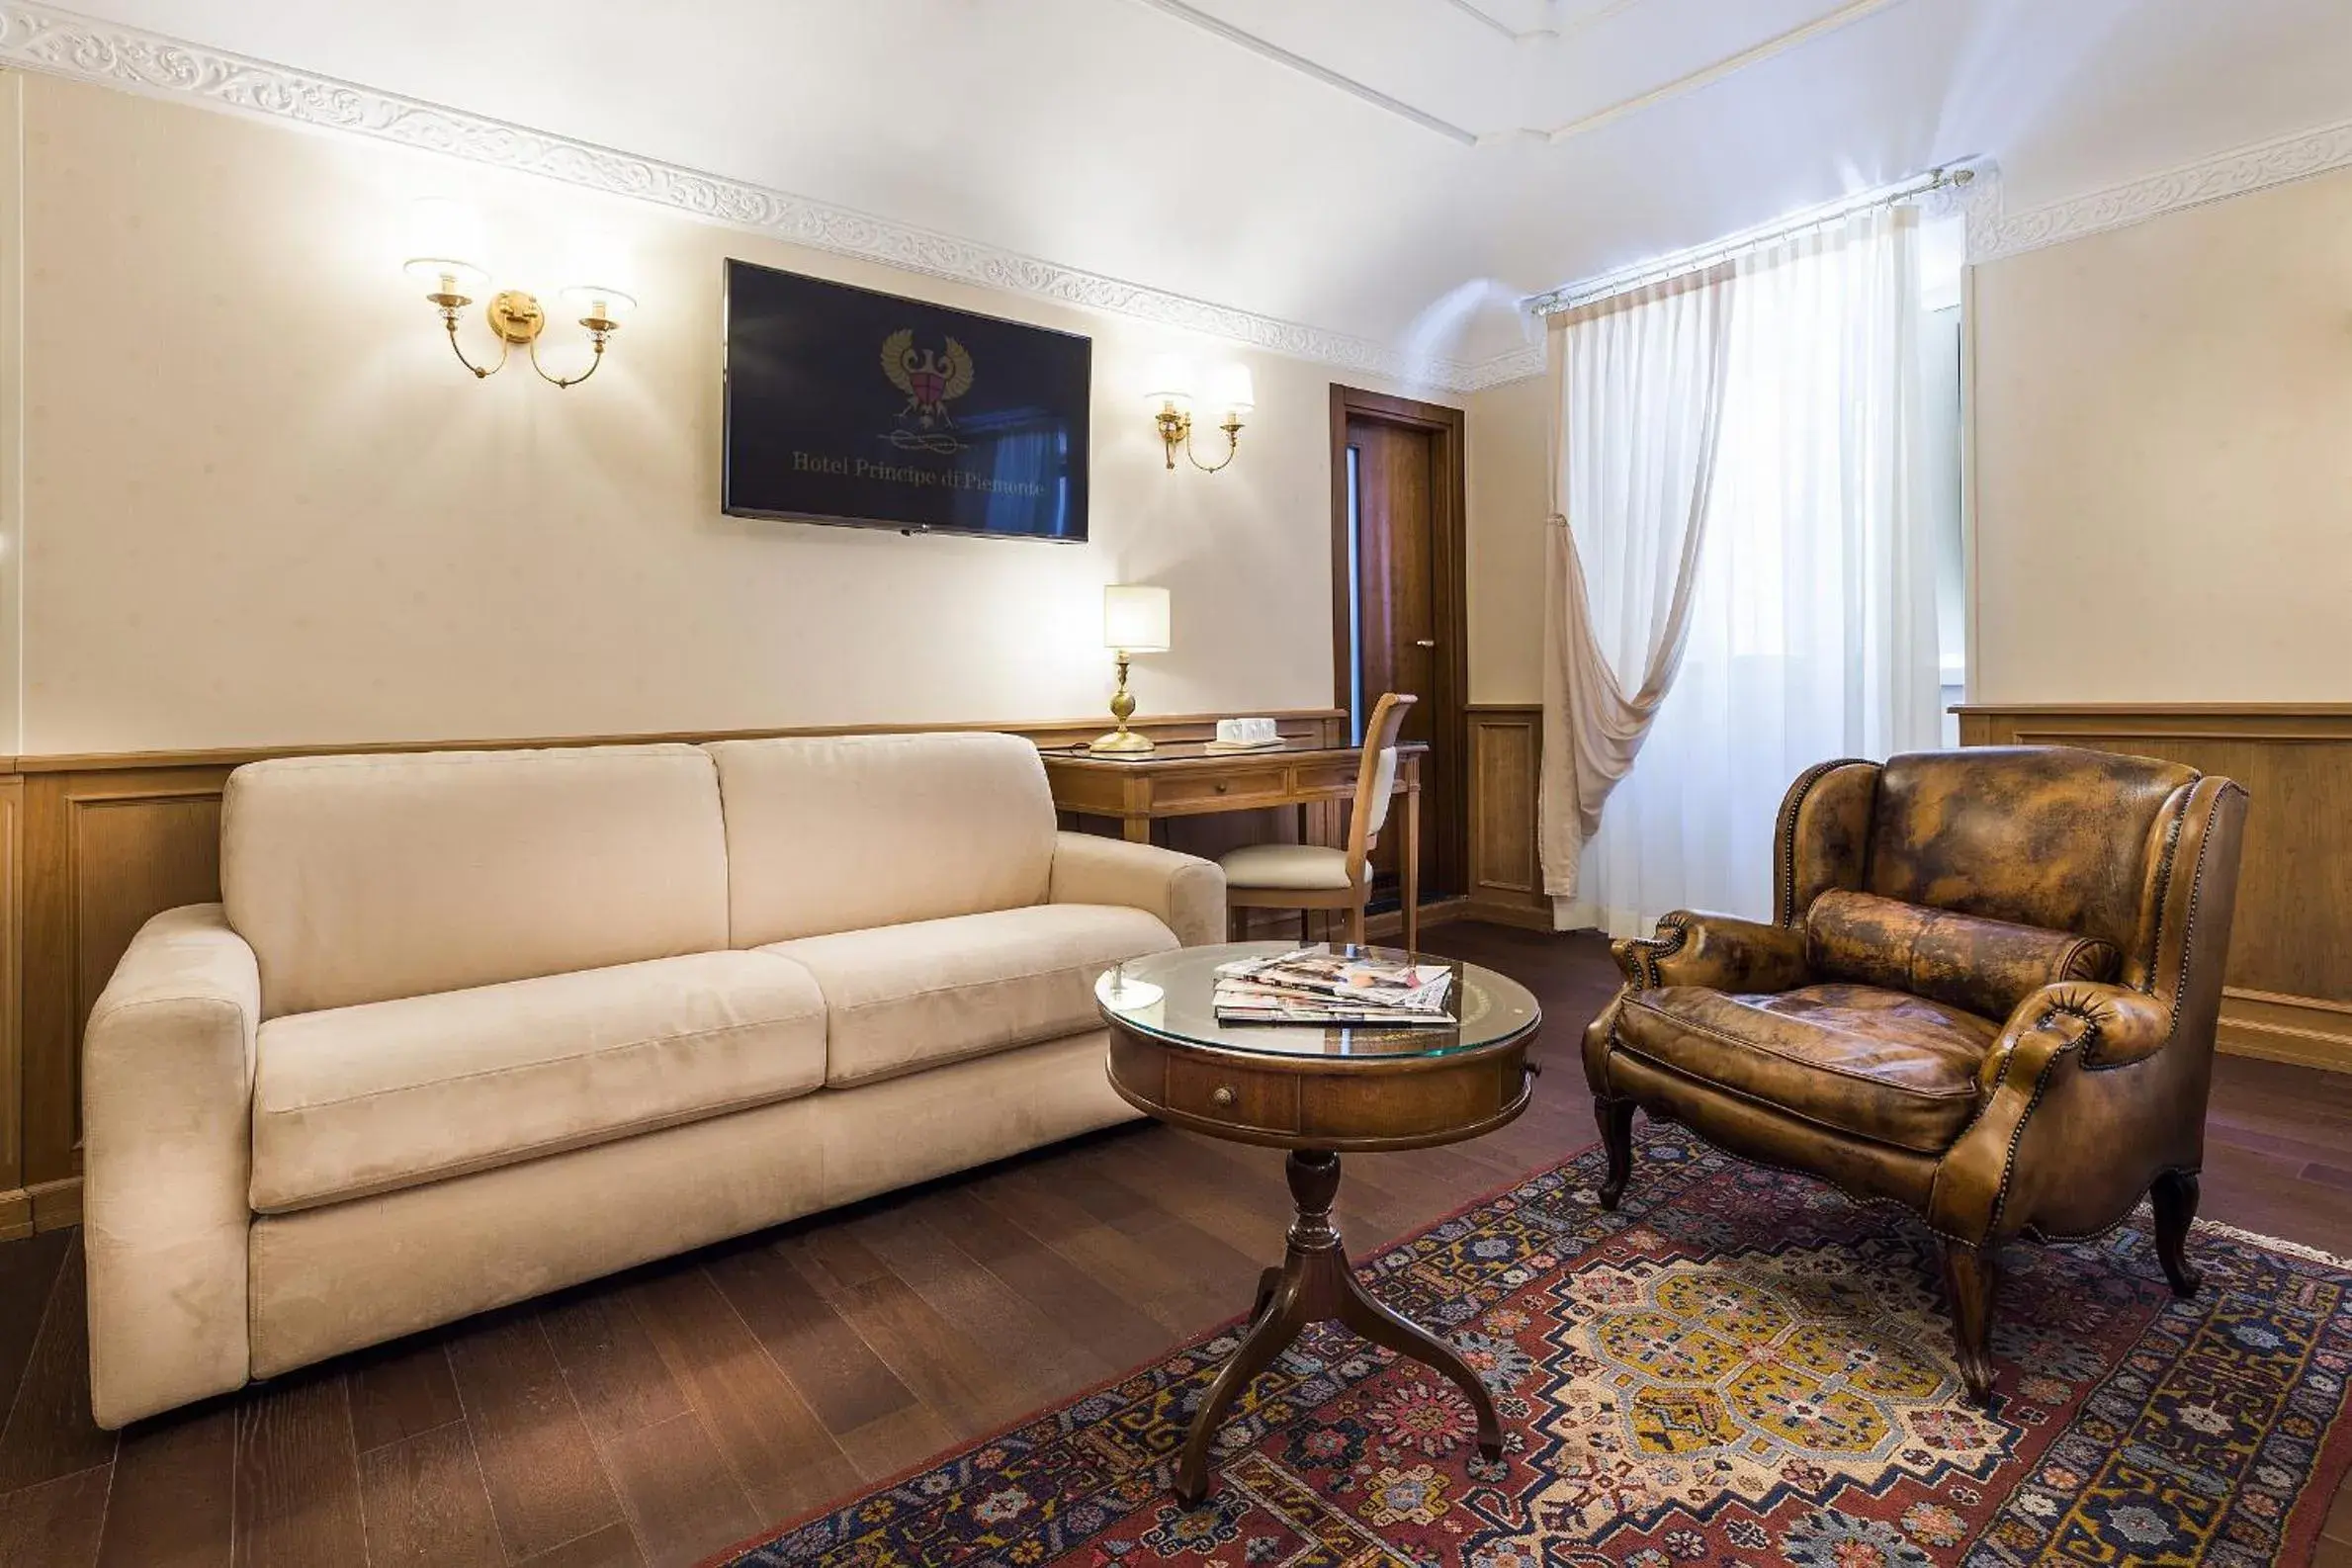 Seating Area in Hotel Principe di Piemonte